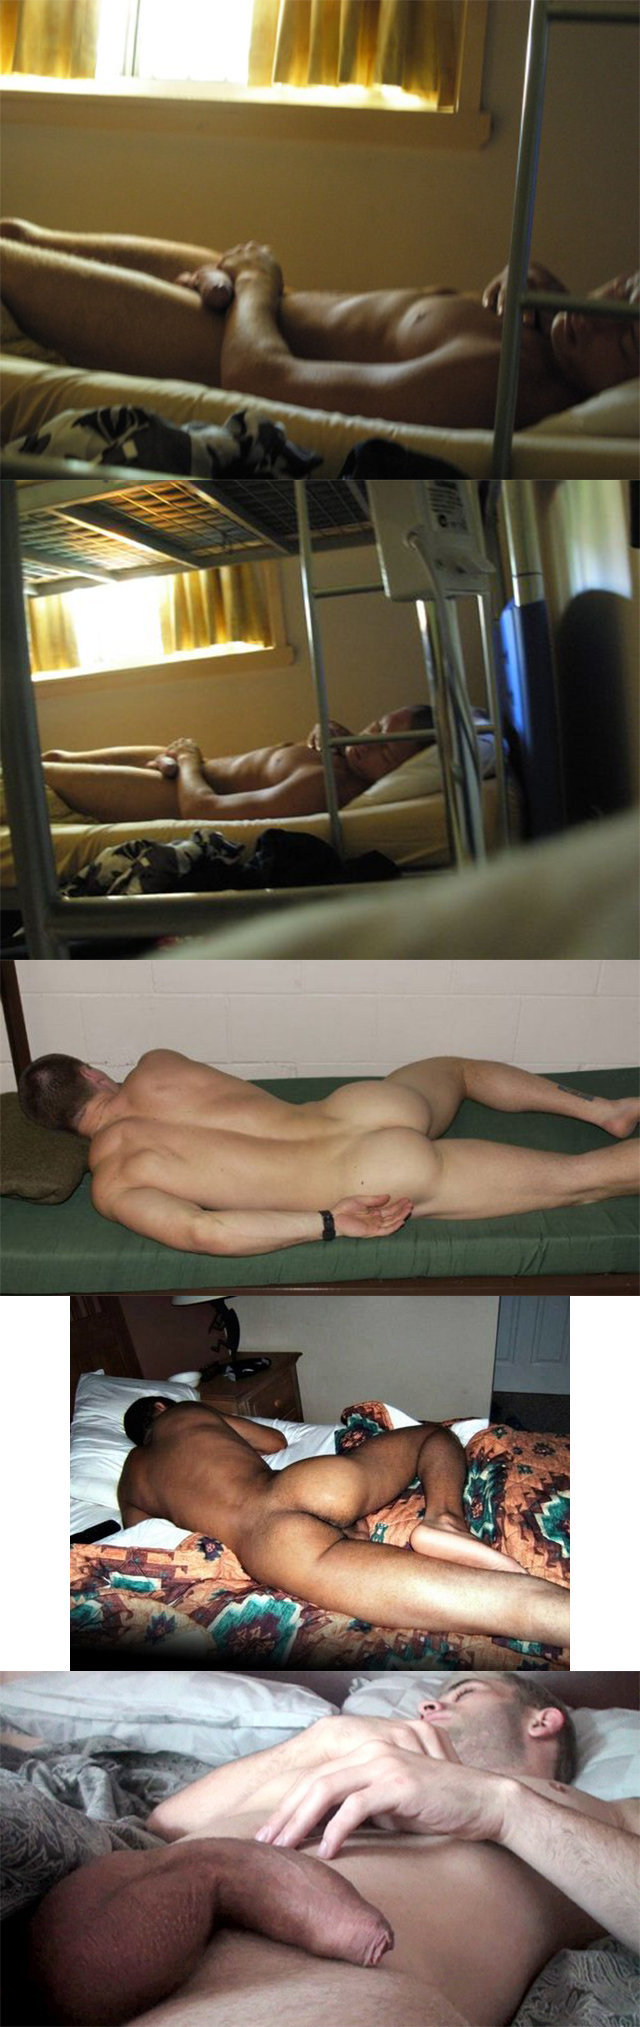 spycam guys sleeping naked hardon